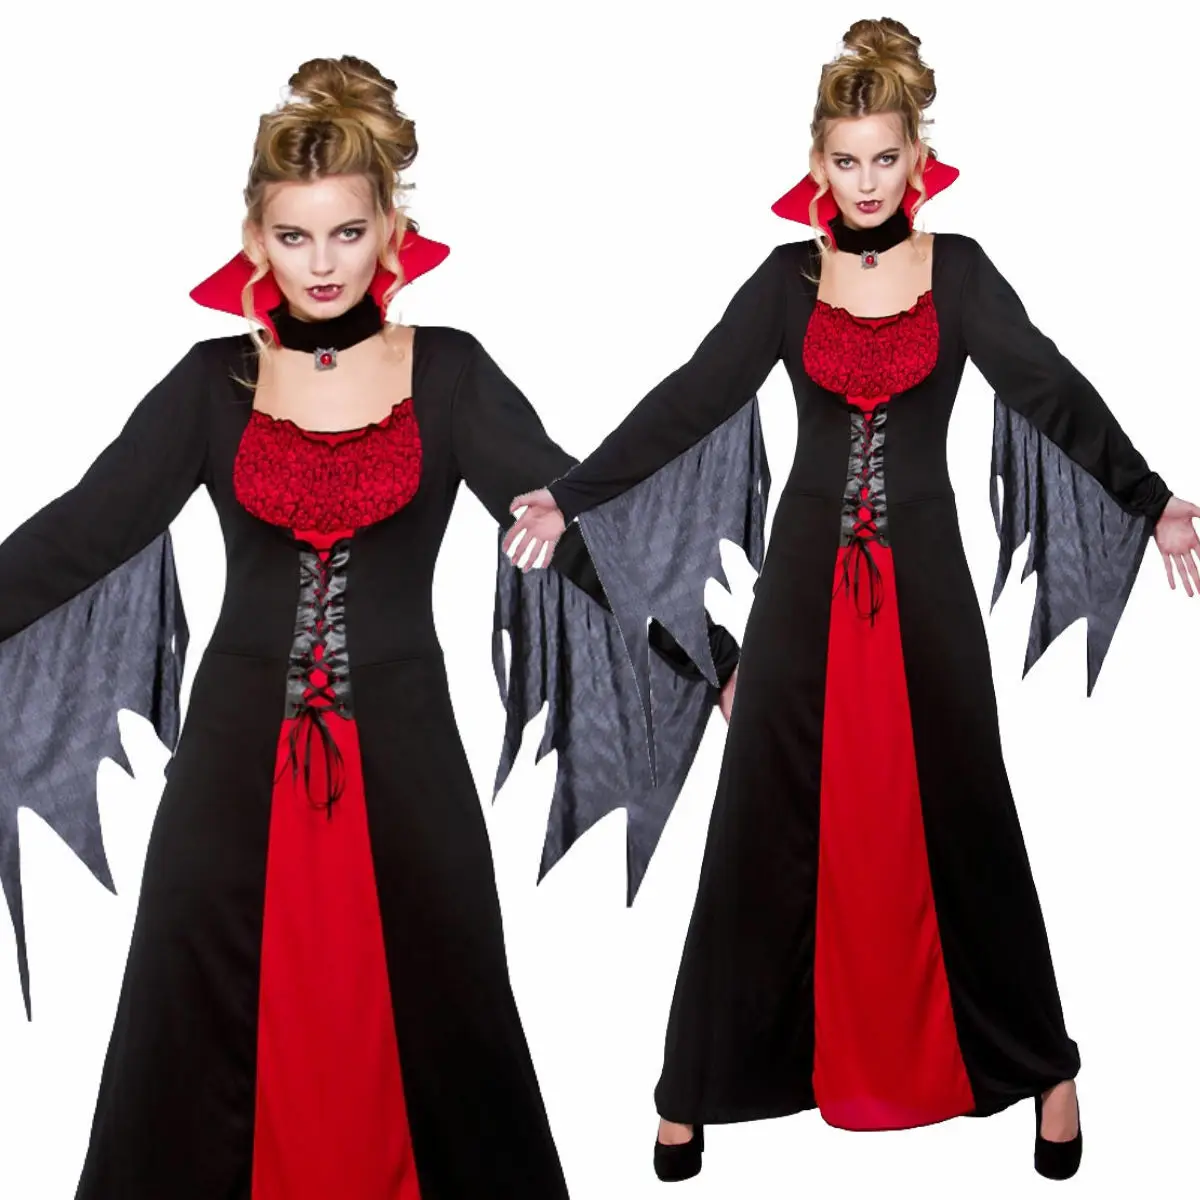 Vampiress Ladies Halloween Fancy Dress Womens Adults Vampire Costume Outfit (1600351109762)